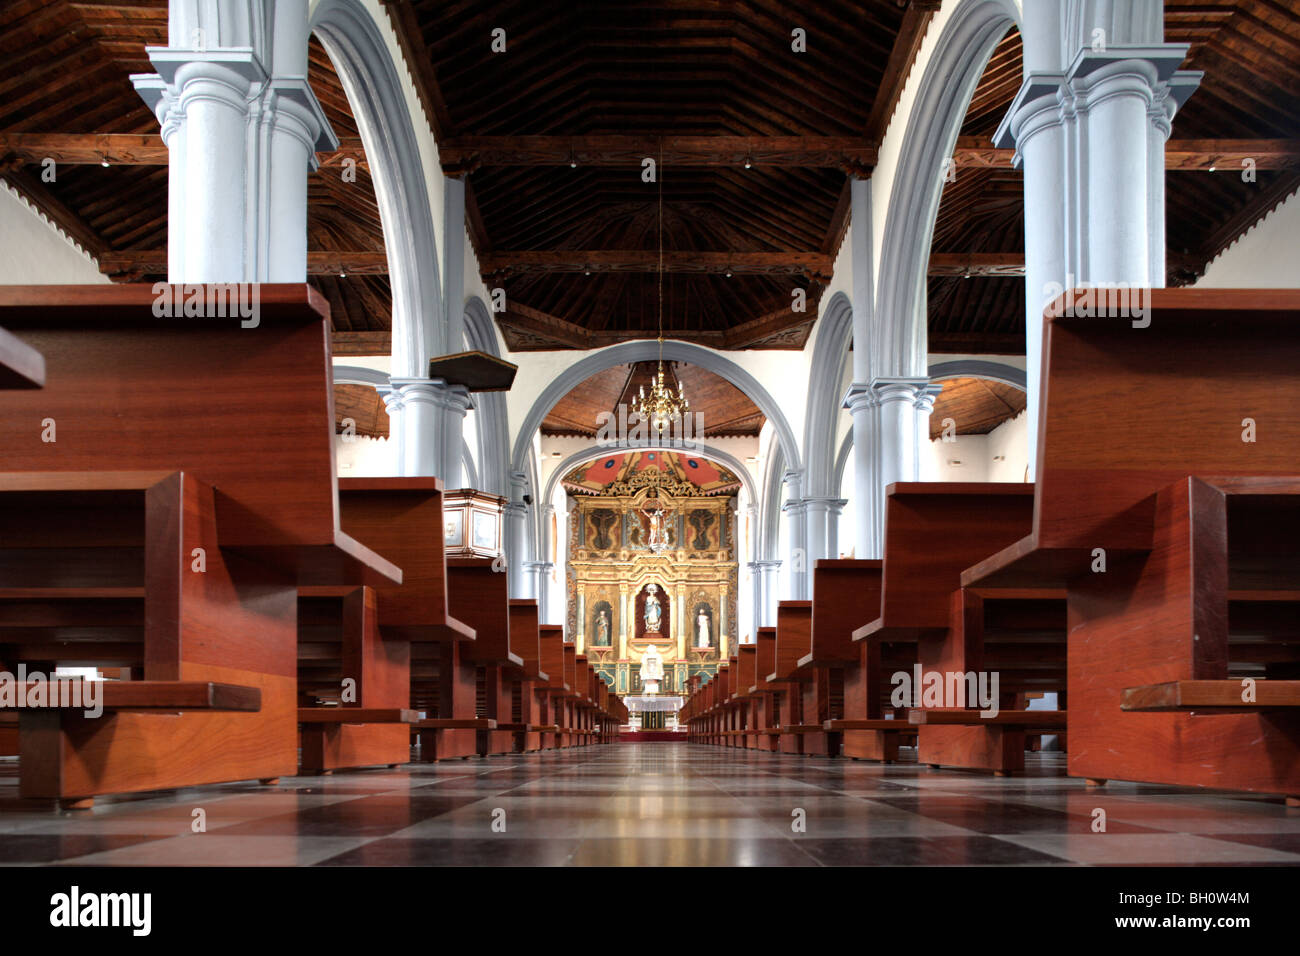 Intérieur d'une église, Nuestra Señora de la Concepción, Chemin de la Vierge, Valverde, El Hierro, Îles Canaries, Espagne Banque D'Images